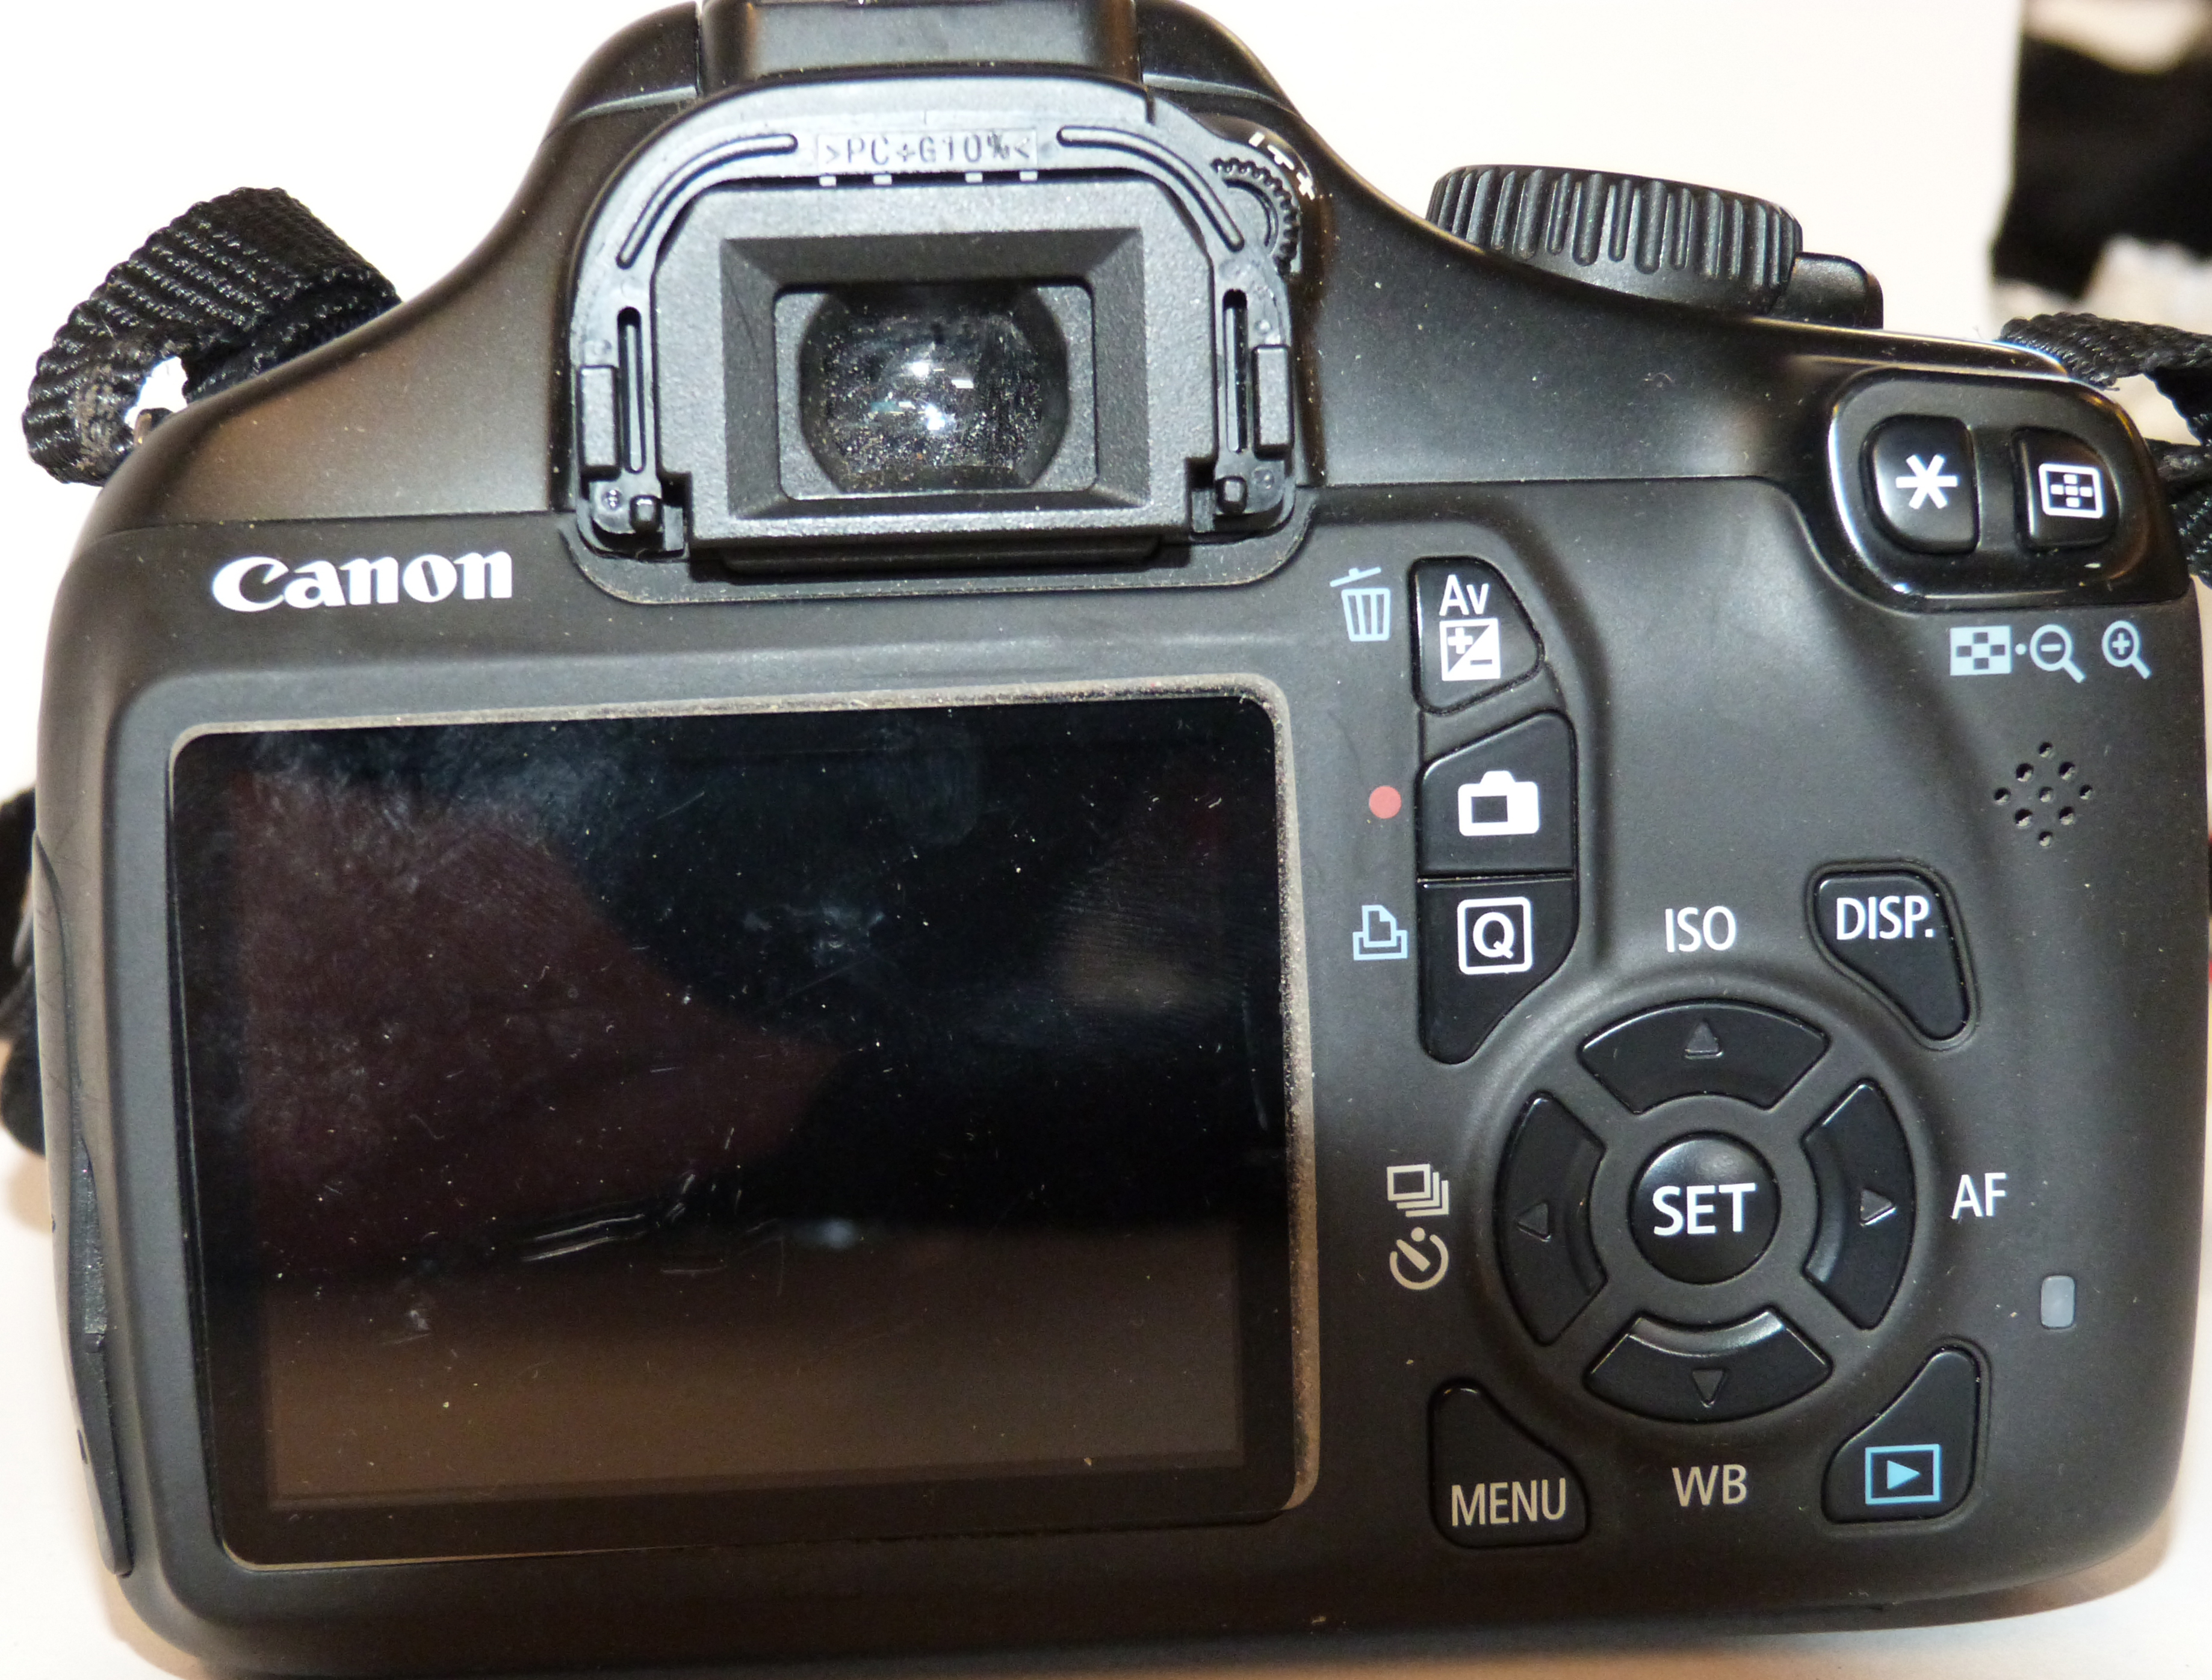 Canon EOS 1100 D digital camera together with Canon zoom lens EF-S 18-55mm, Tamron AF 70-300mm lens, - Image 4 of 6